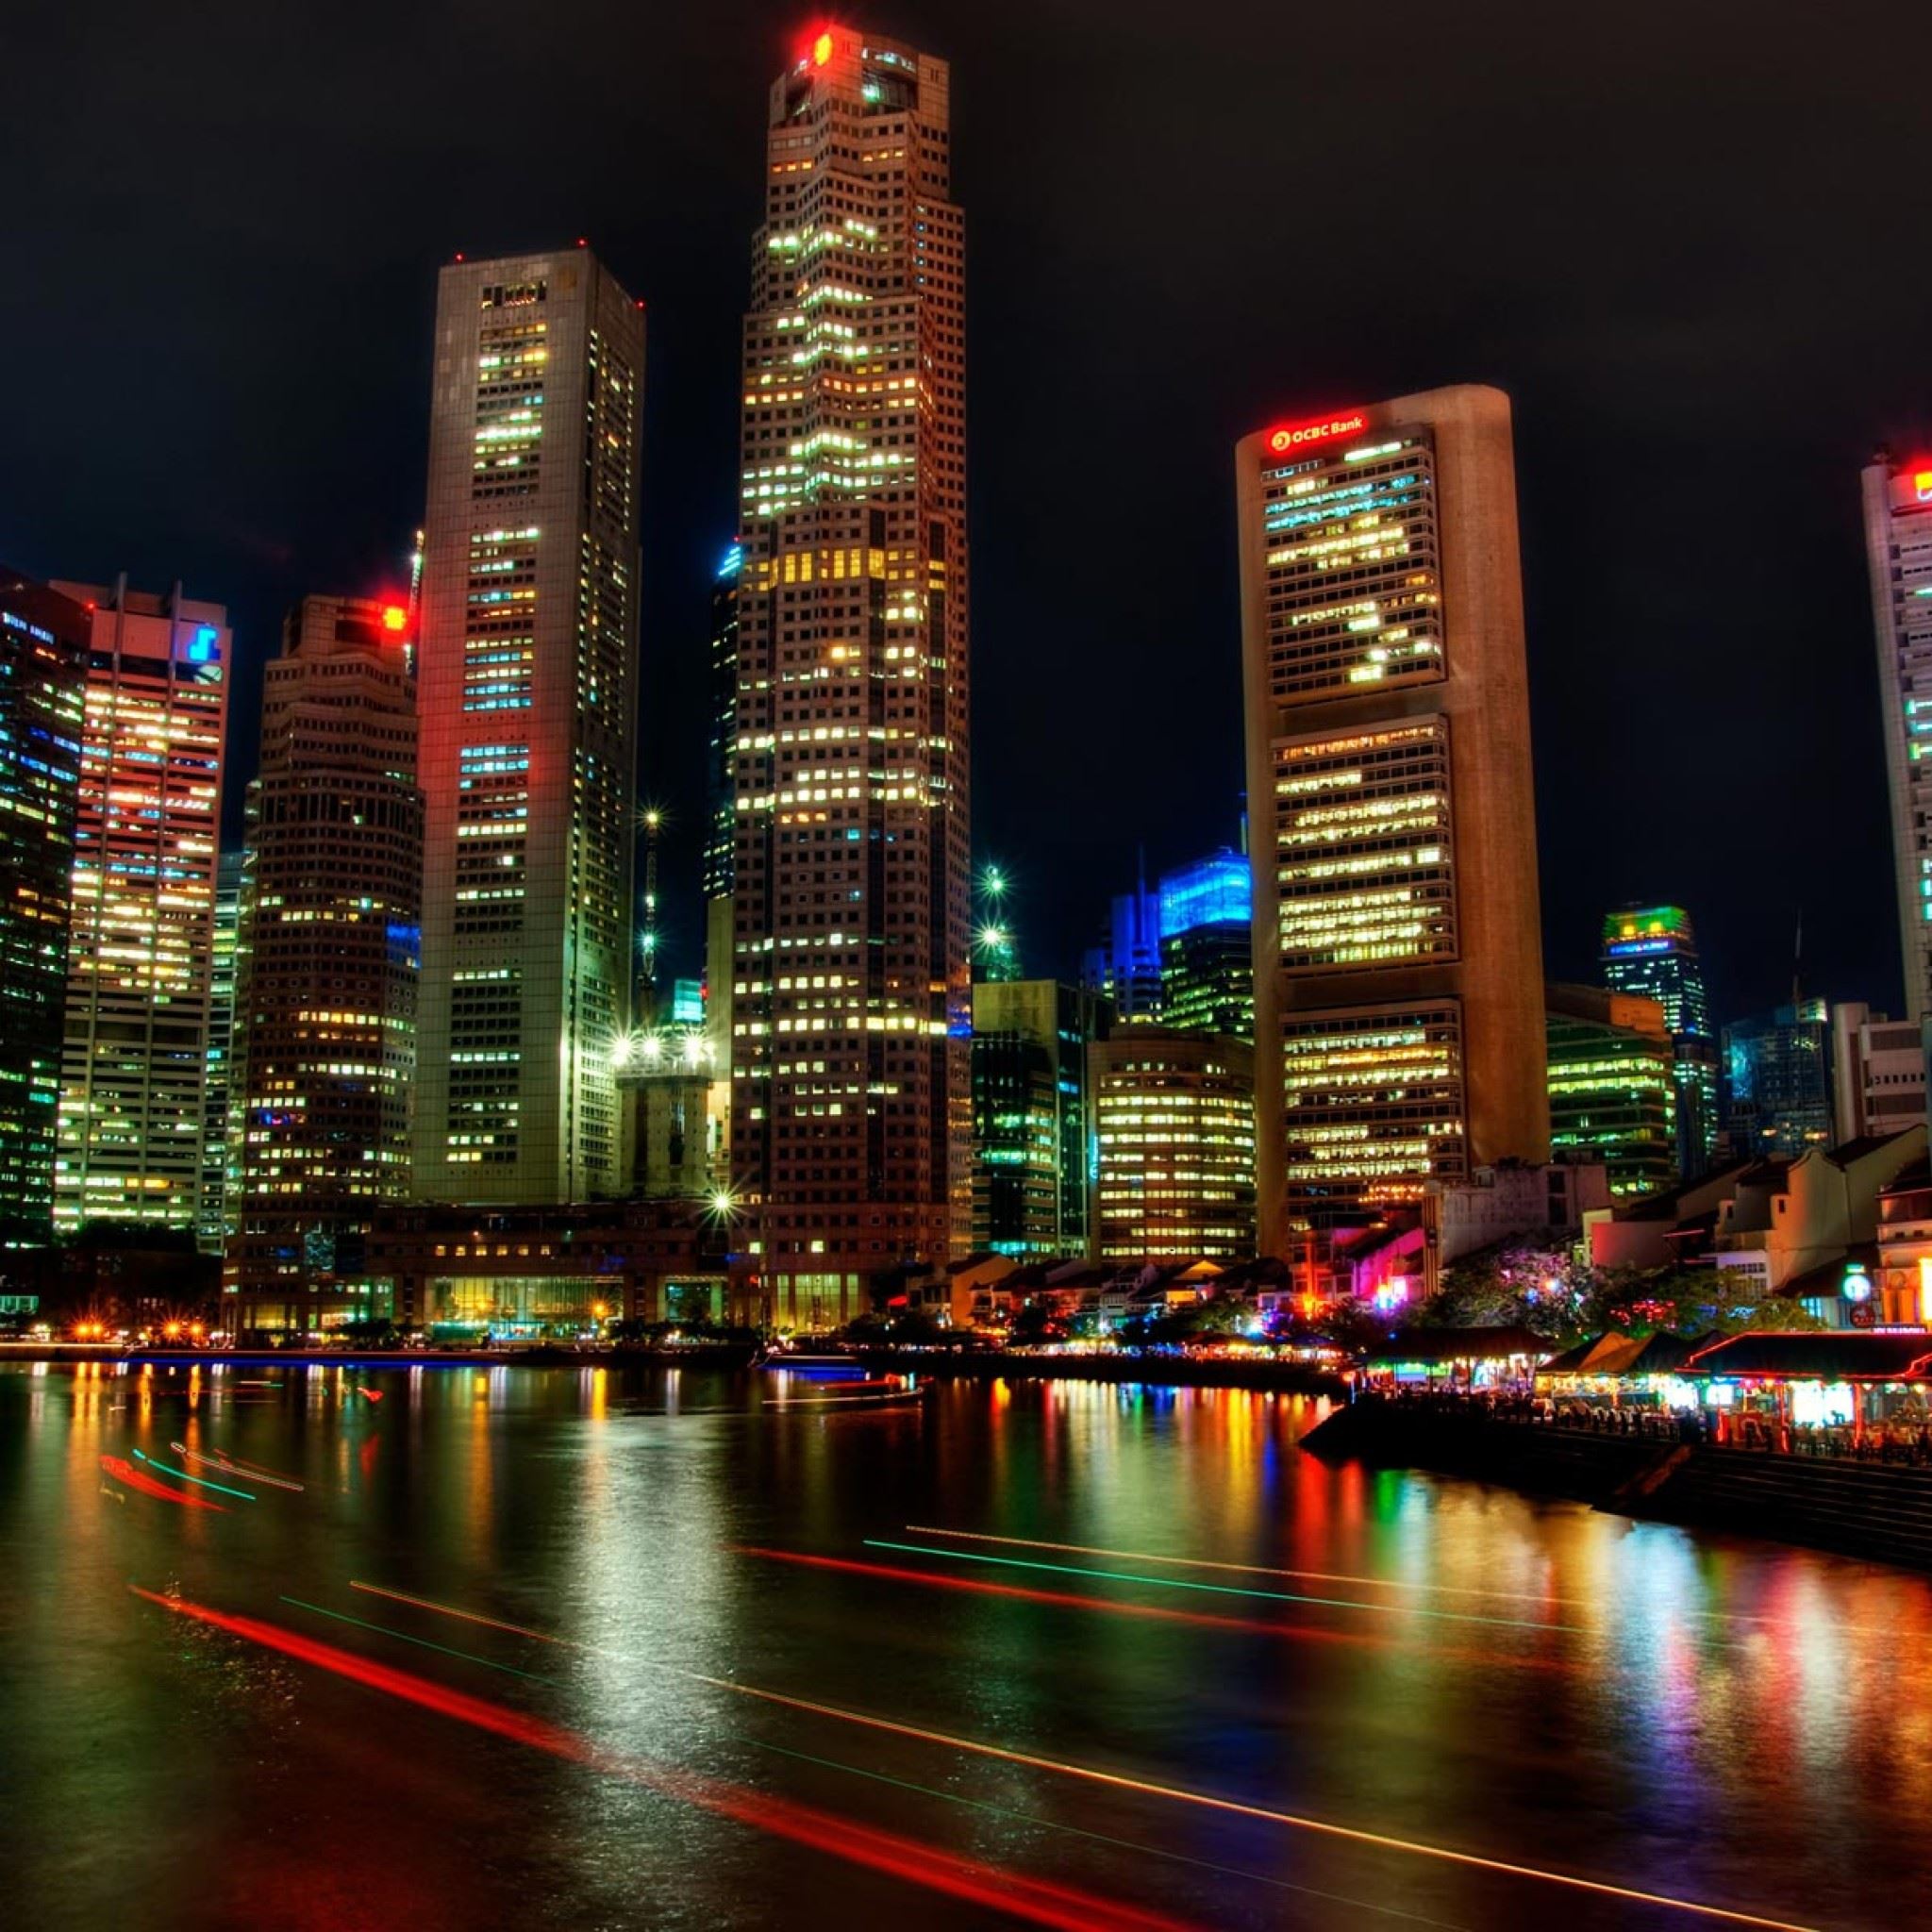 Singapore Night iPad Air Wallpapers Free Download